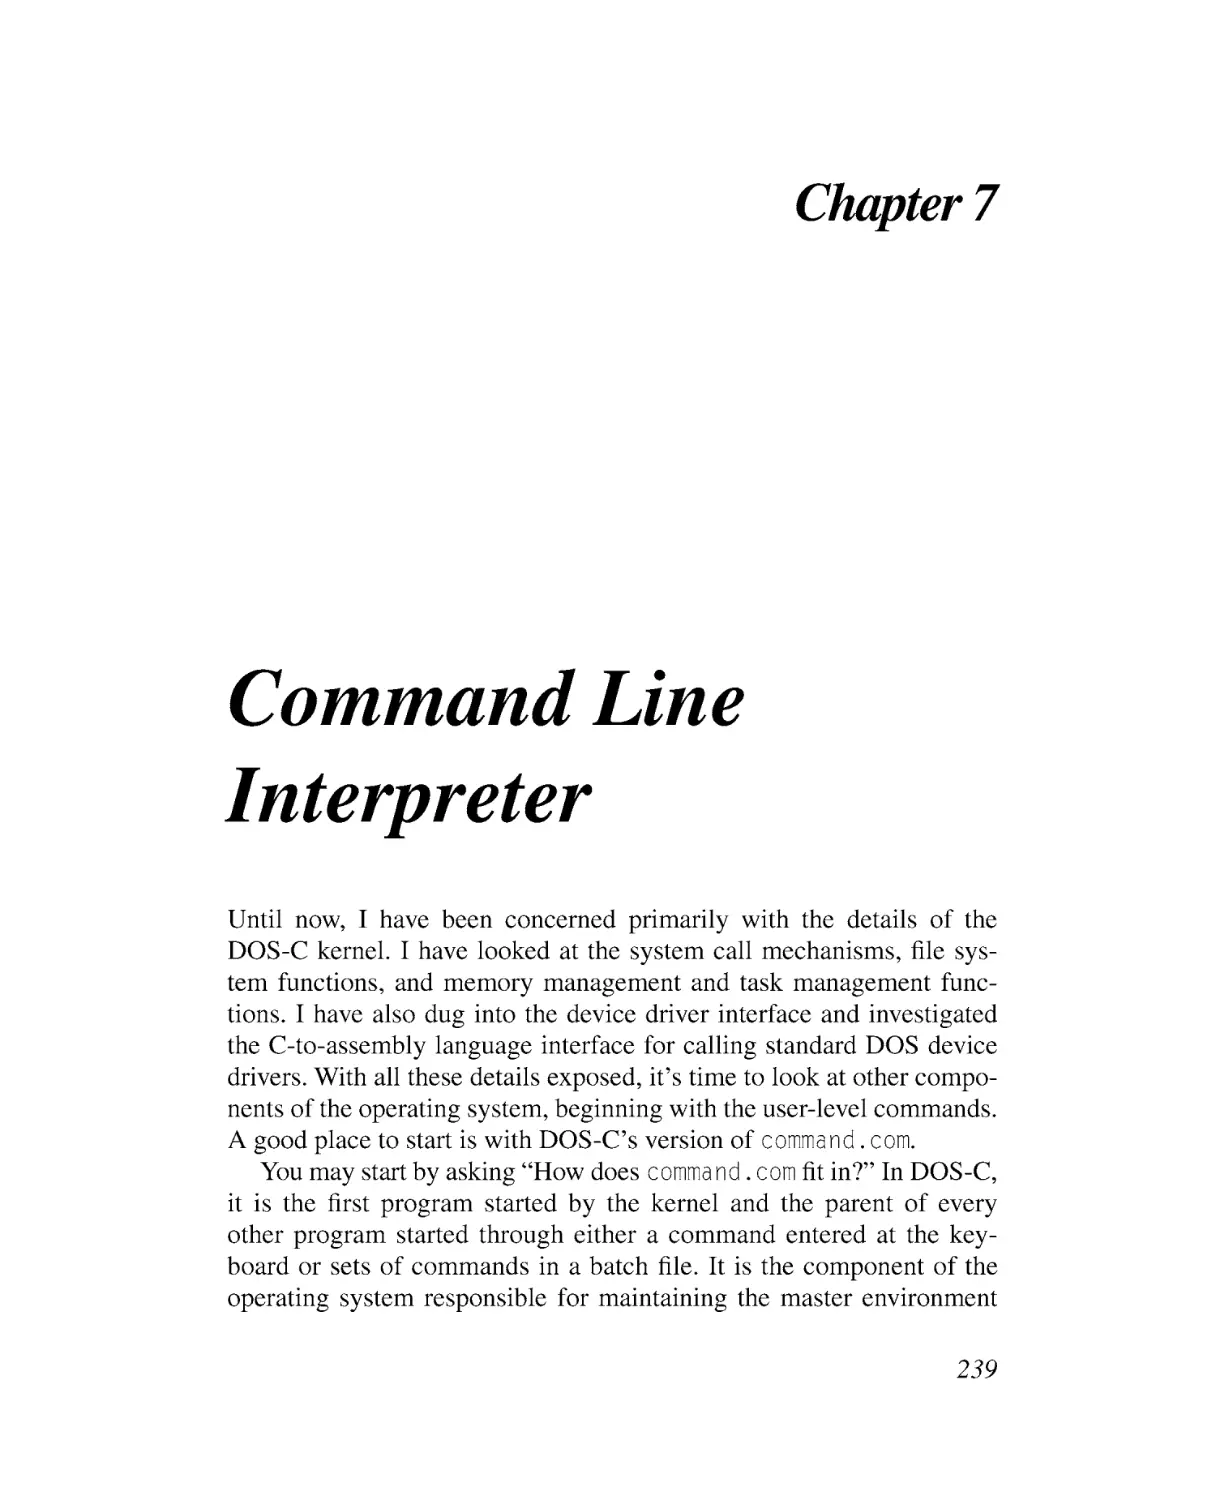 Chapter 7 Command Line Interpreter